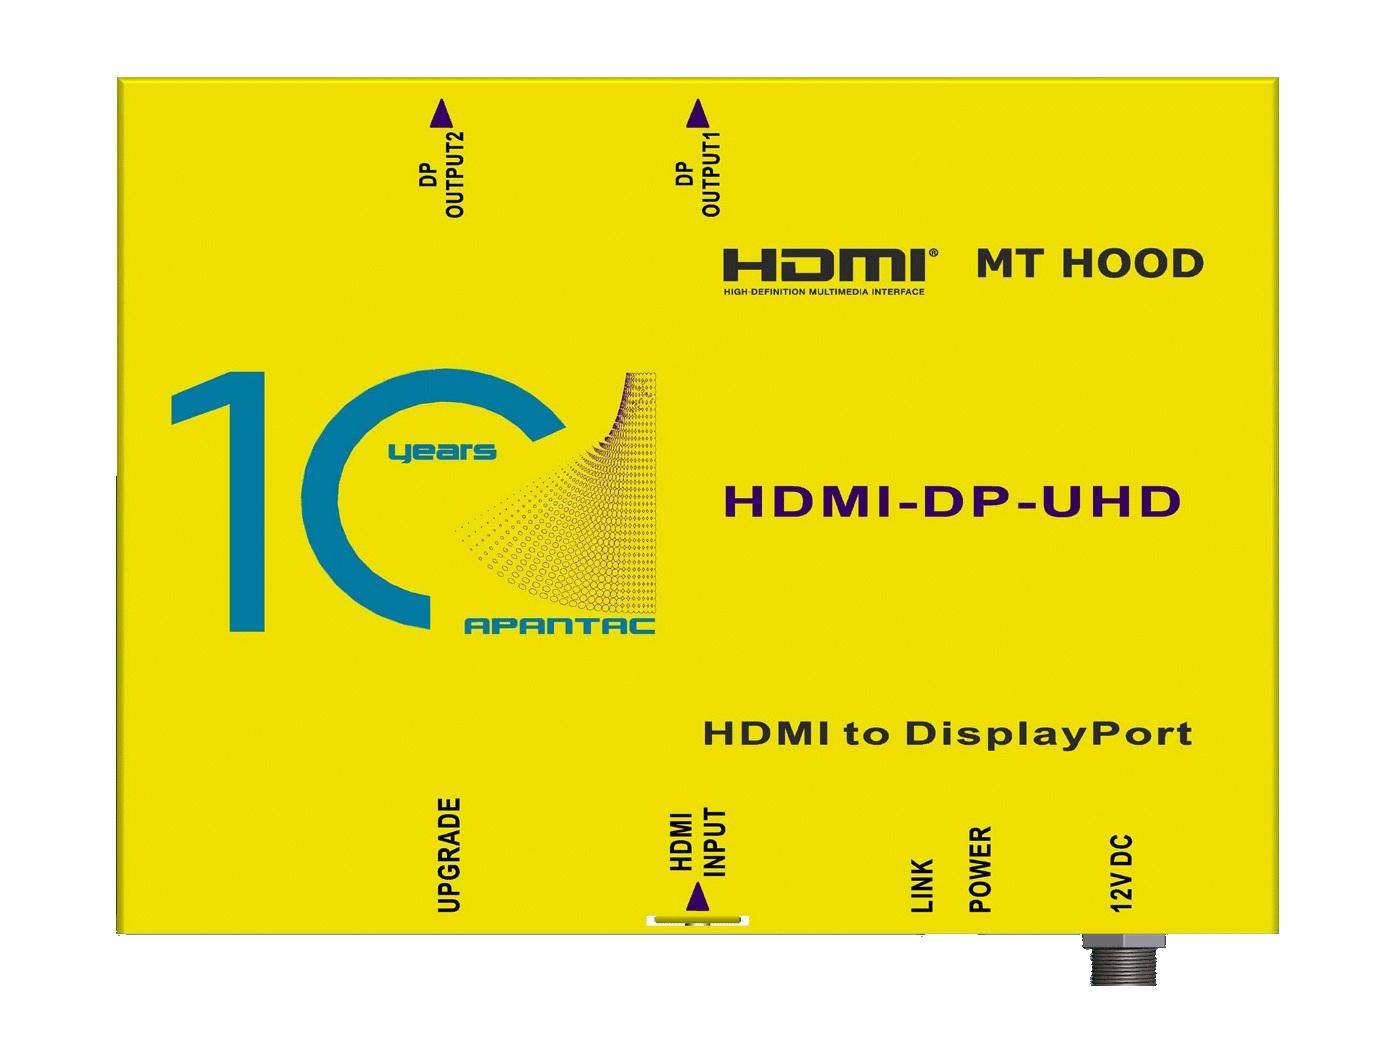 Apantac HDM-DP-UHD HDMI 2.0 to DP 1.2 Converter